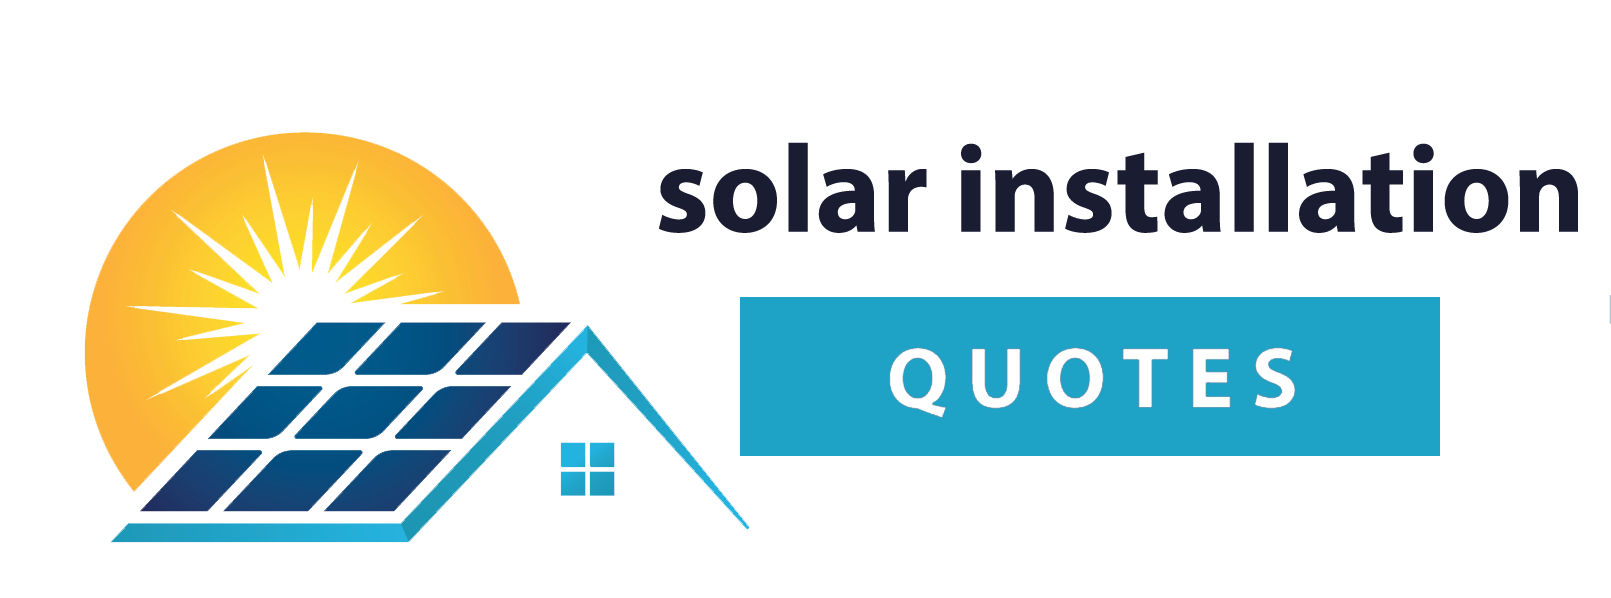 solar installation quotes